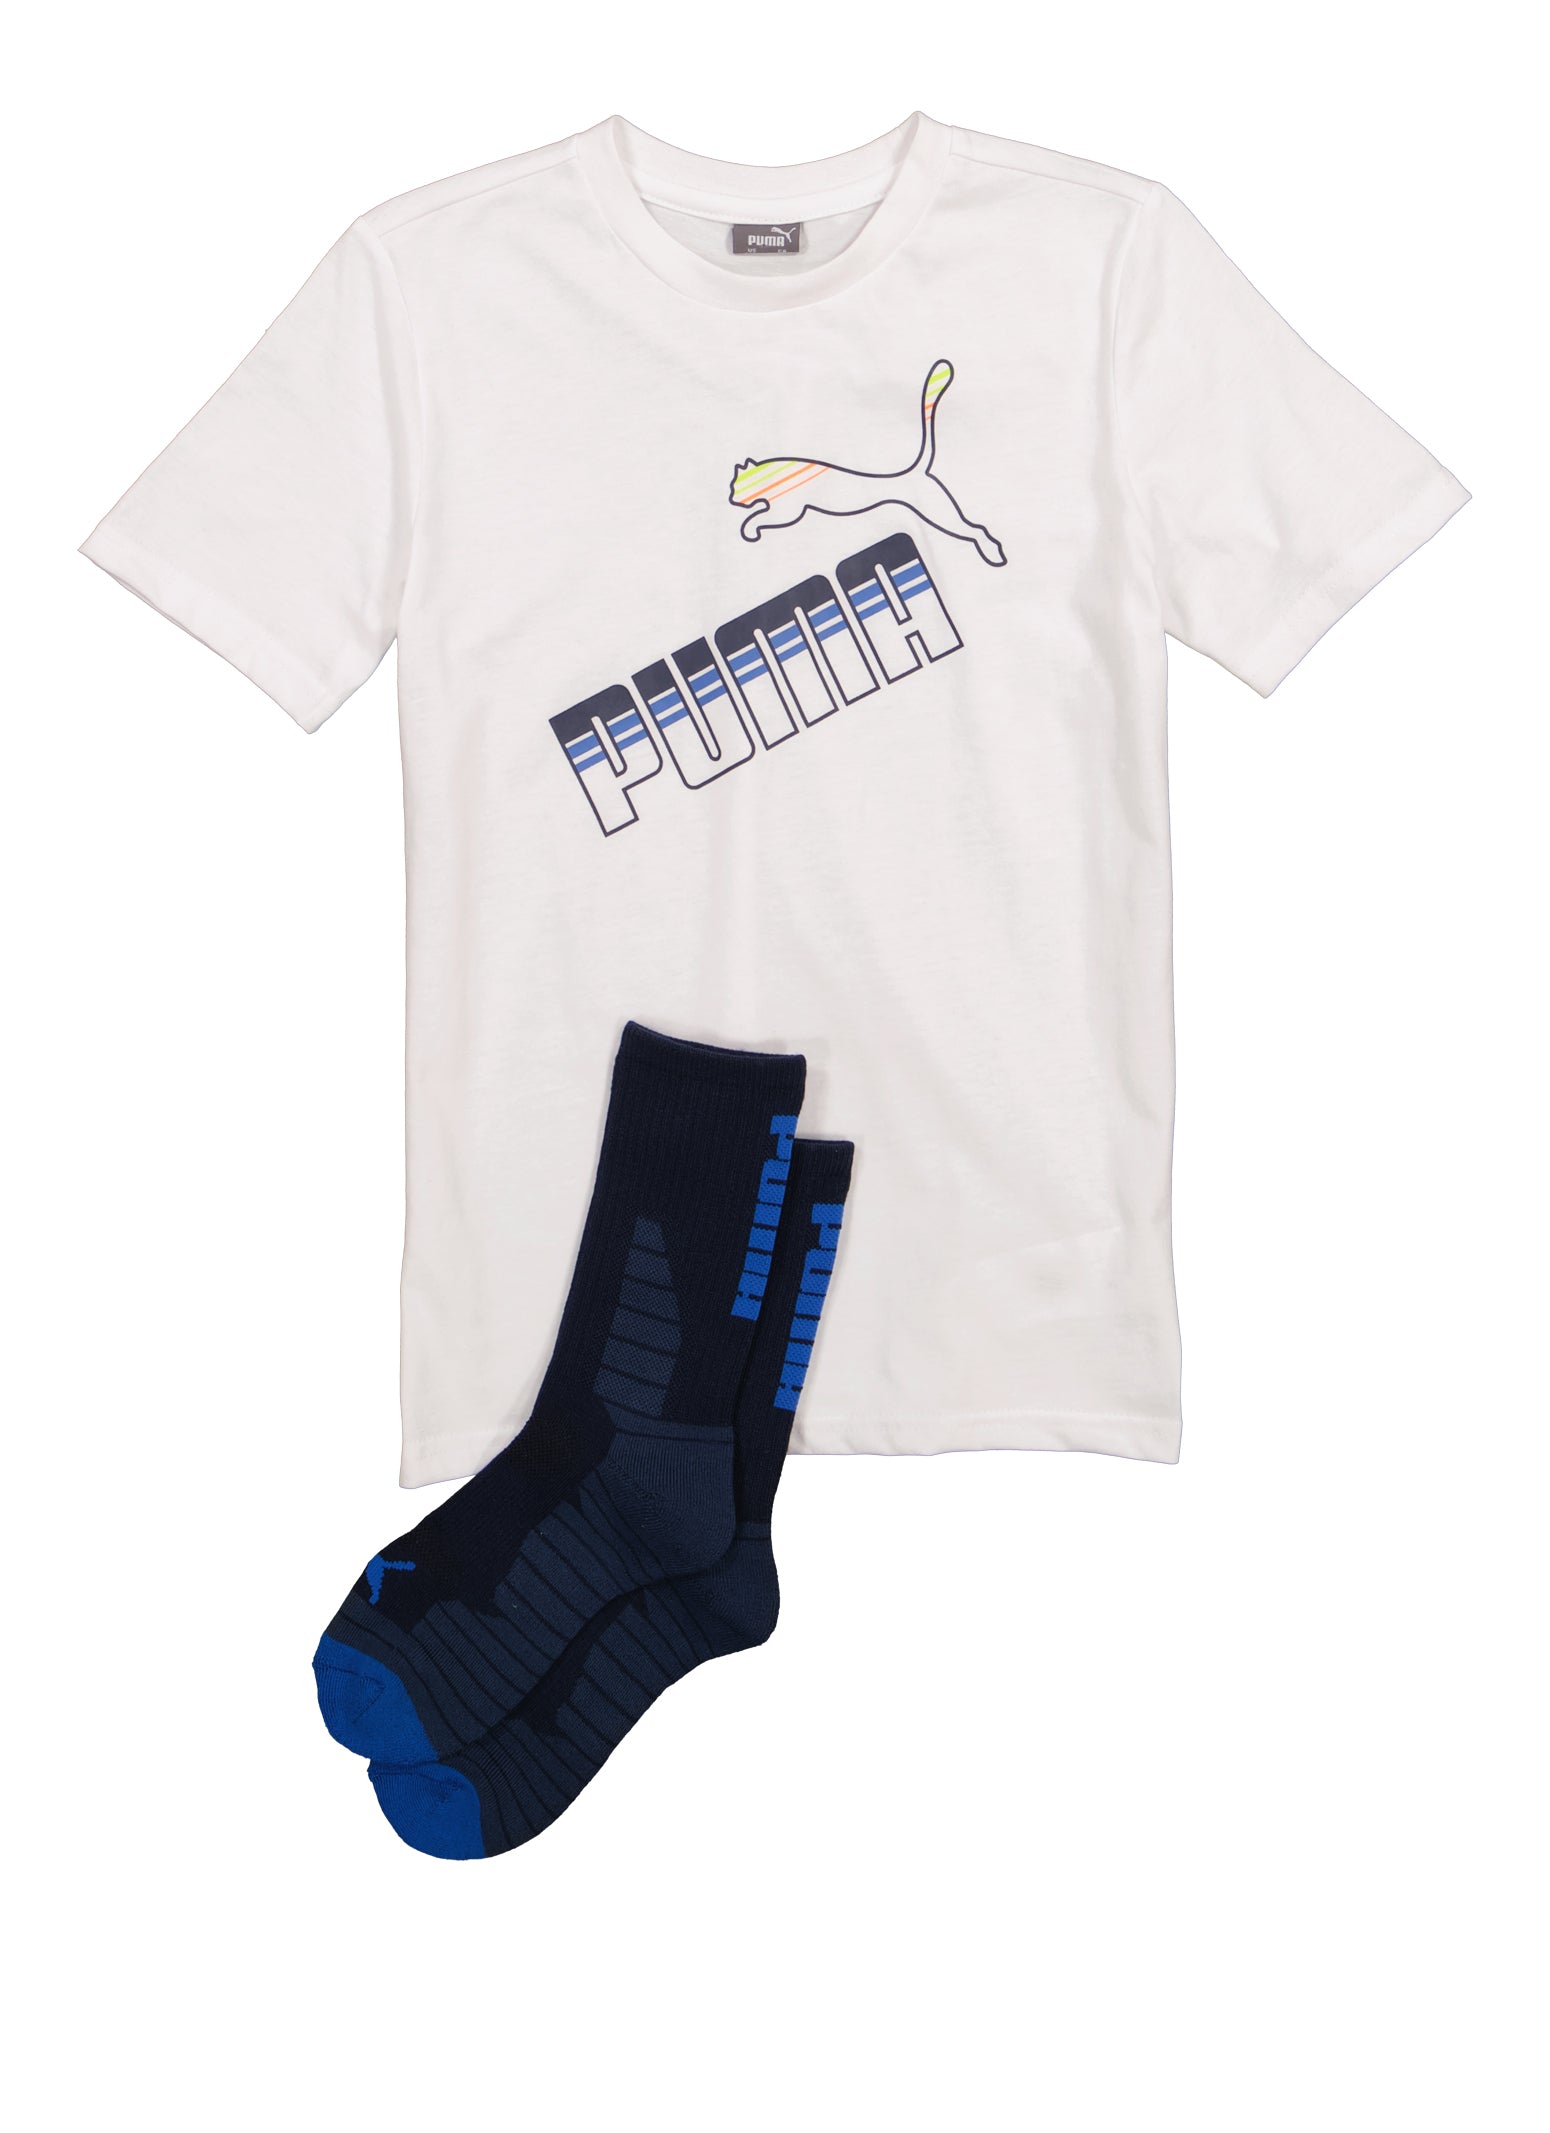 Boys Puma Striped Logo Graphic Tee and Socks, White, Size XL